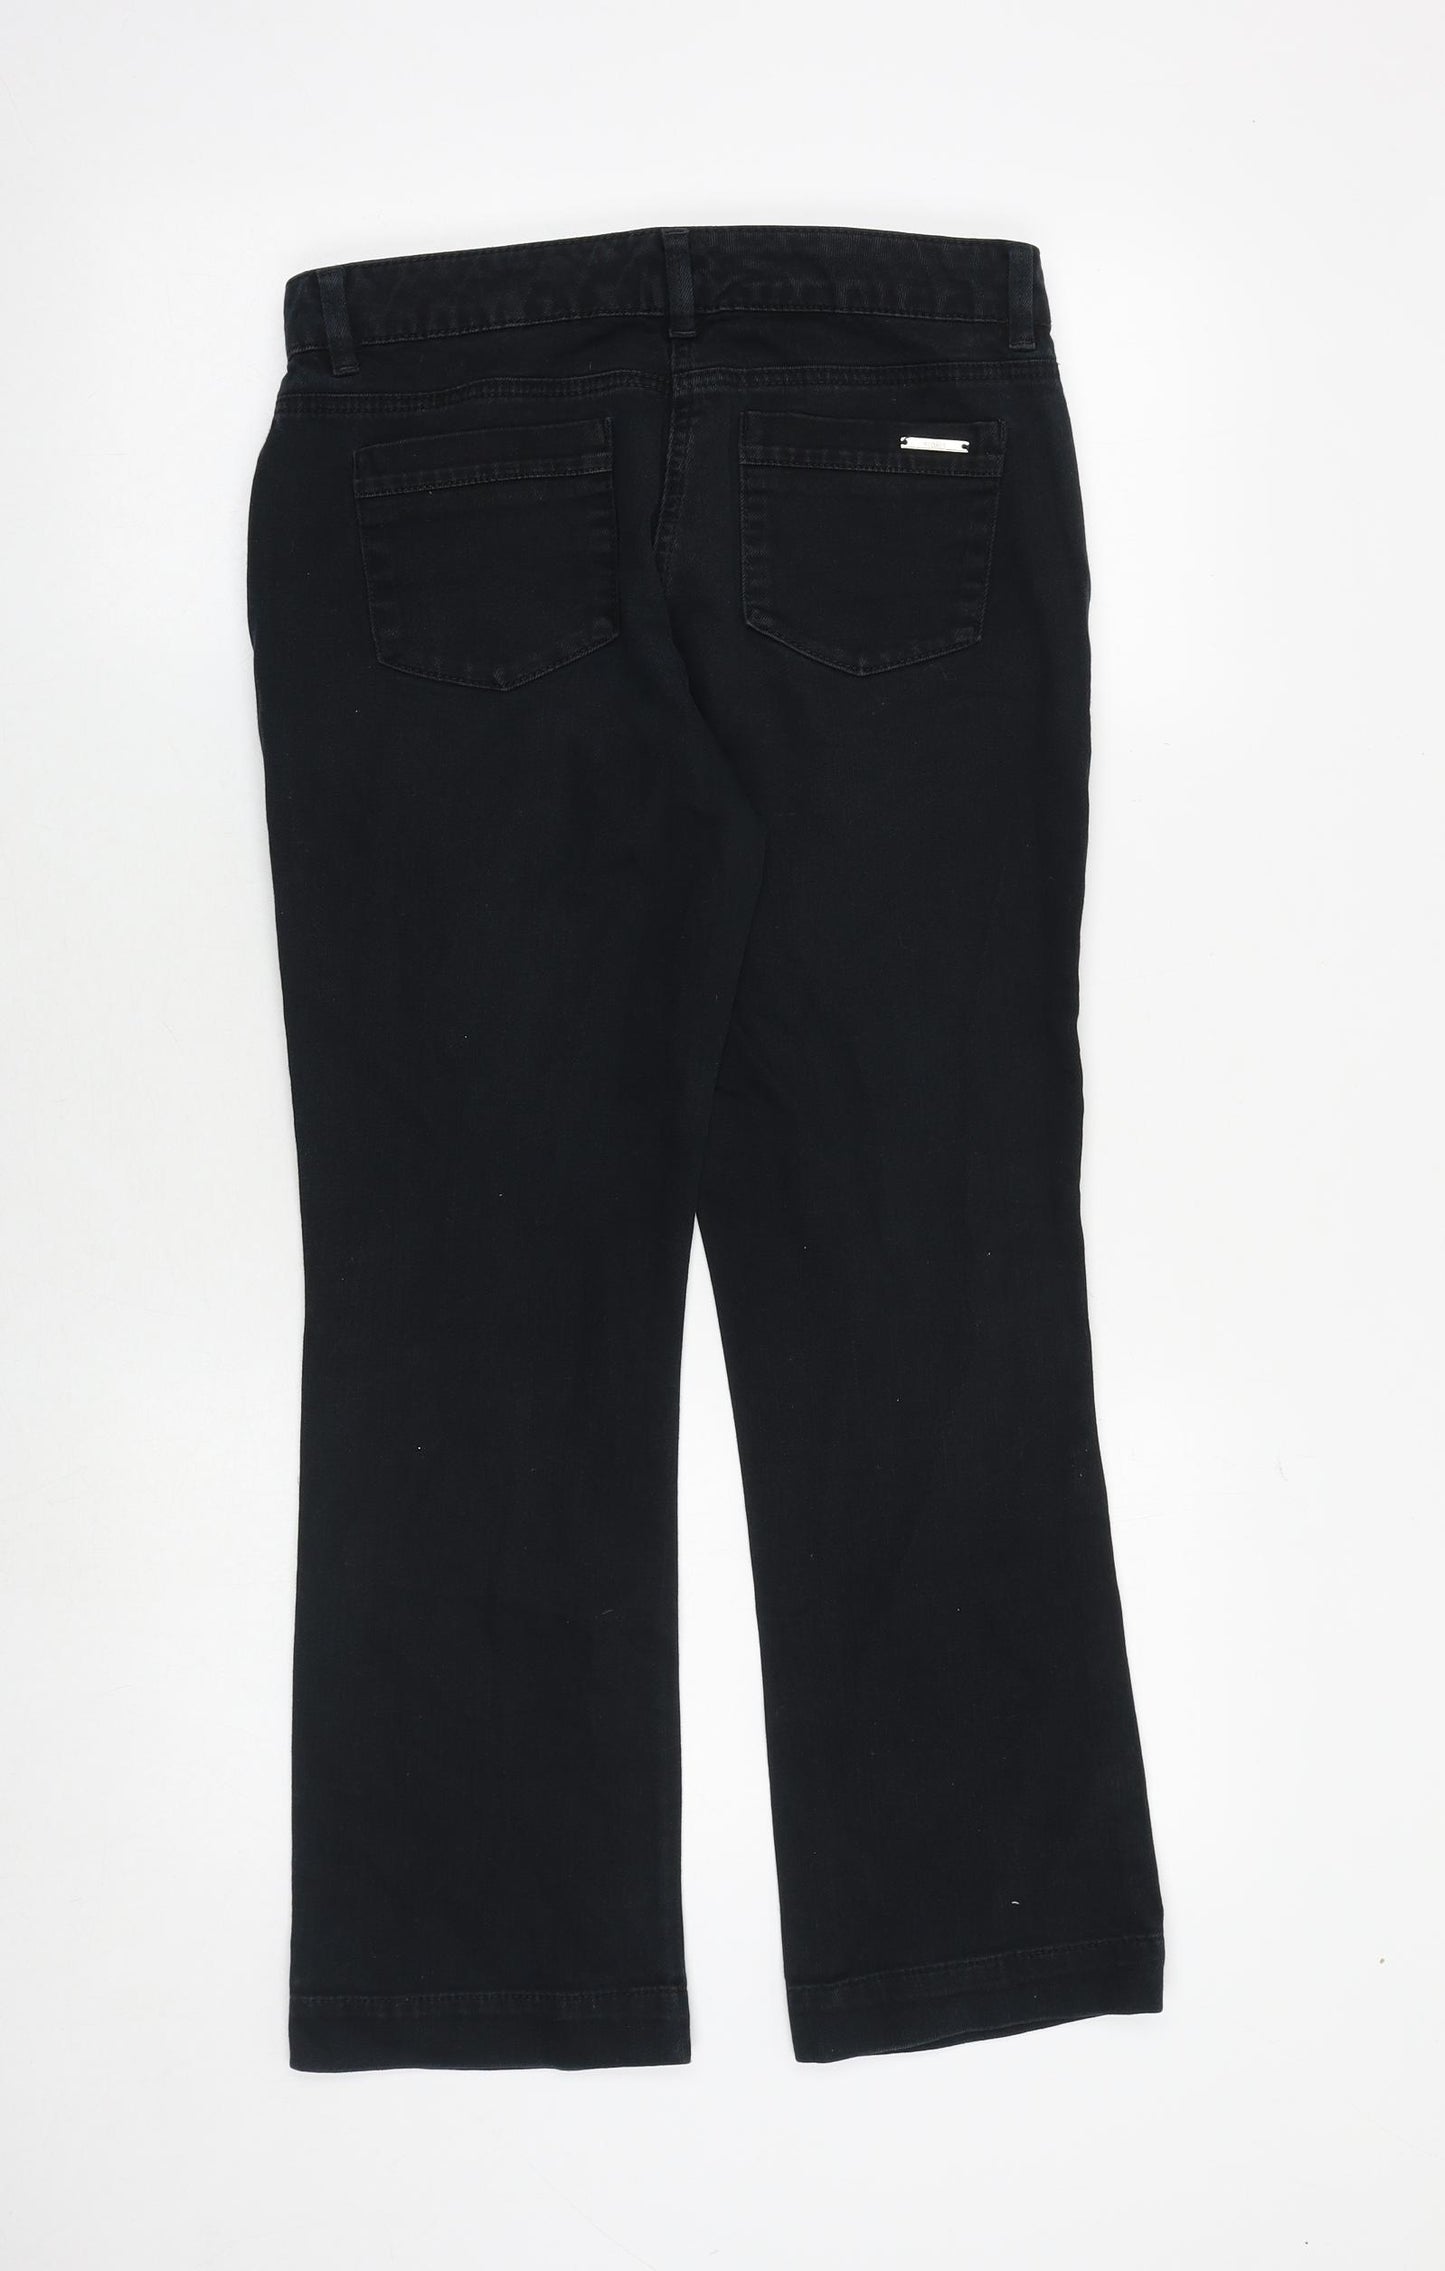 Wallis Womens Black Cotton Bootcut Jeans Size 12 Regular Zip